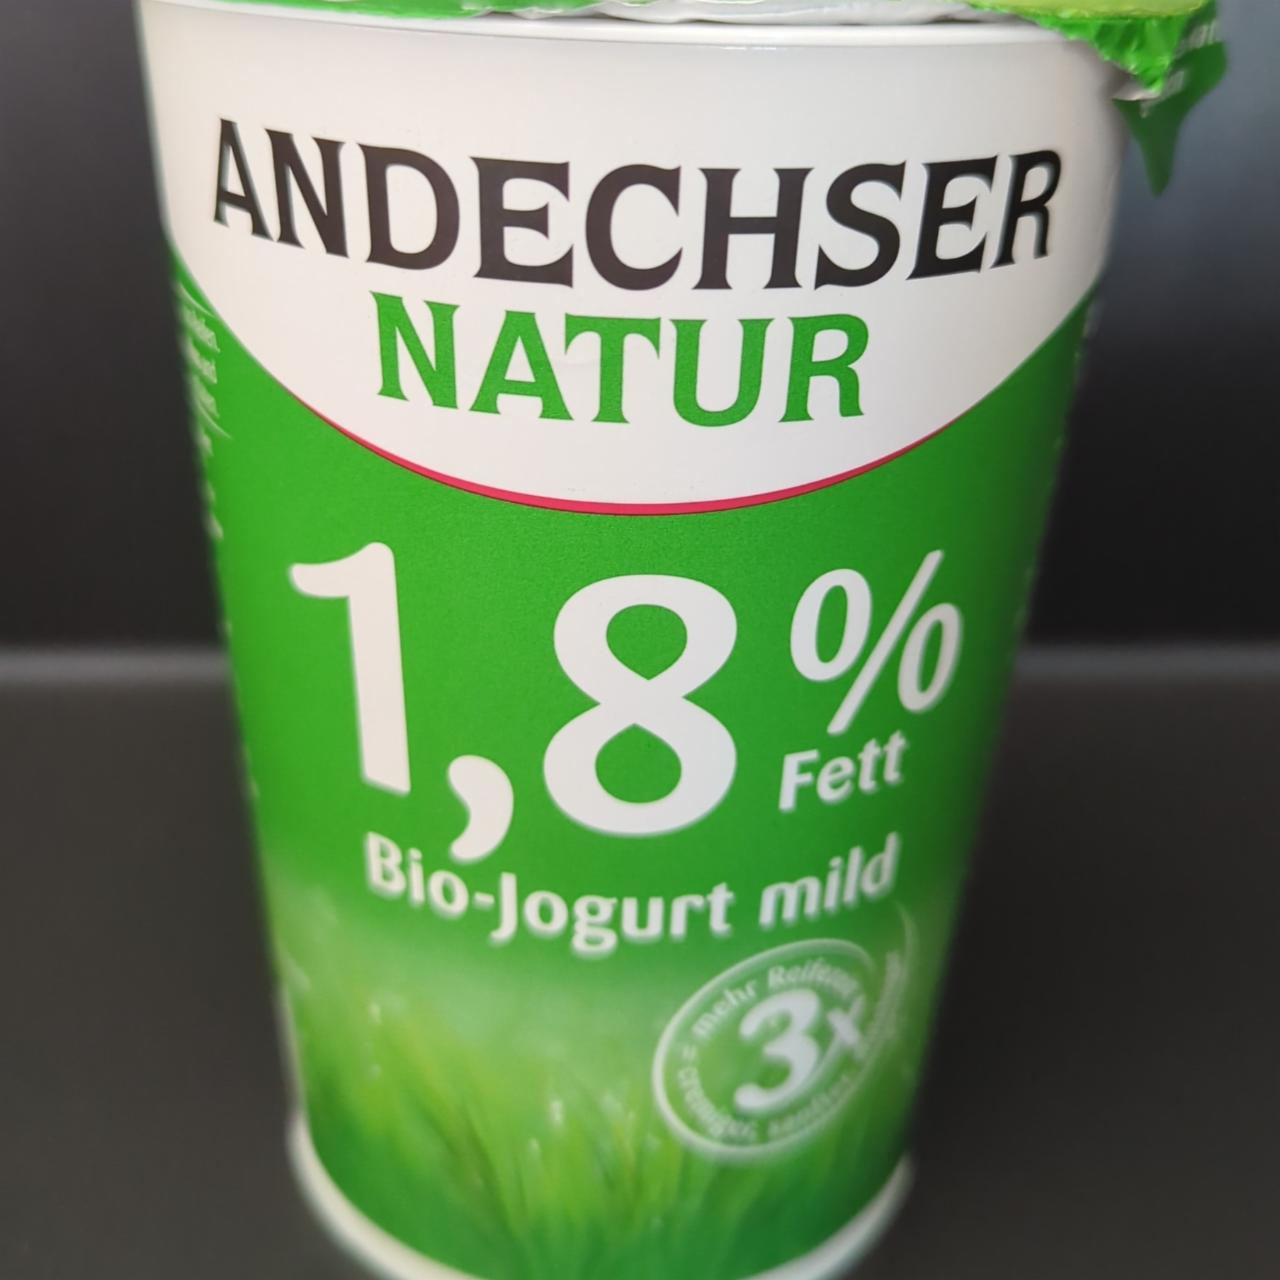 Fotografie - Andechser Natur Bio-Jogurt mild 1,8%